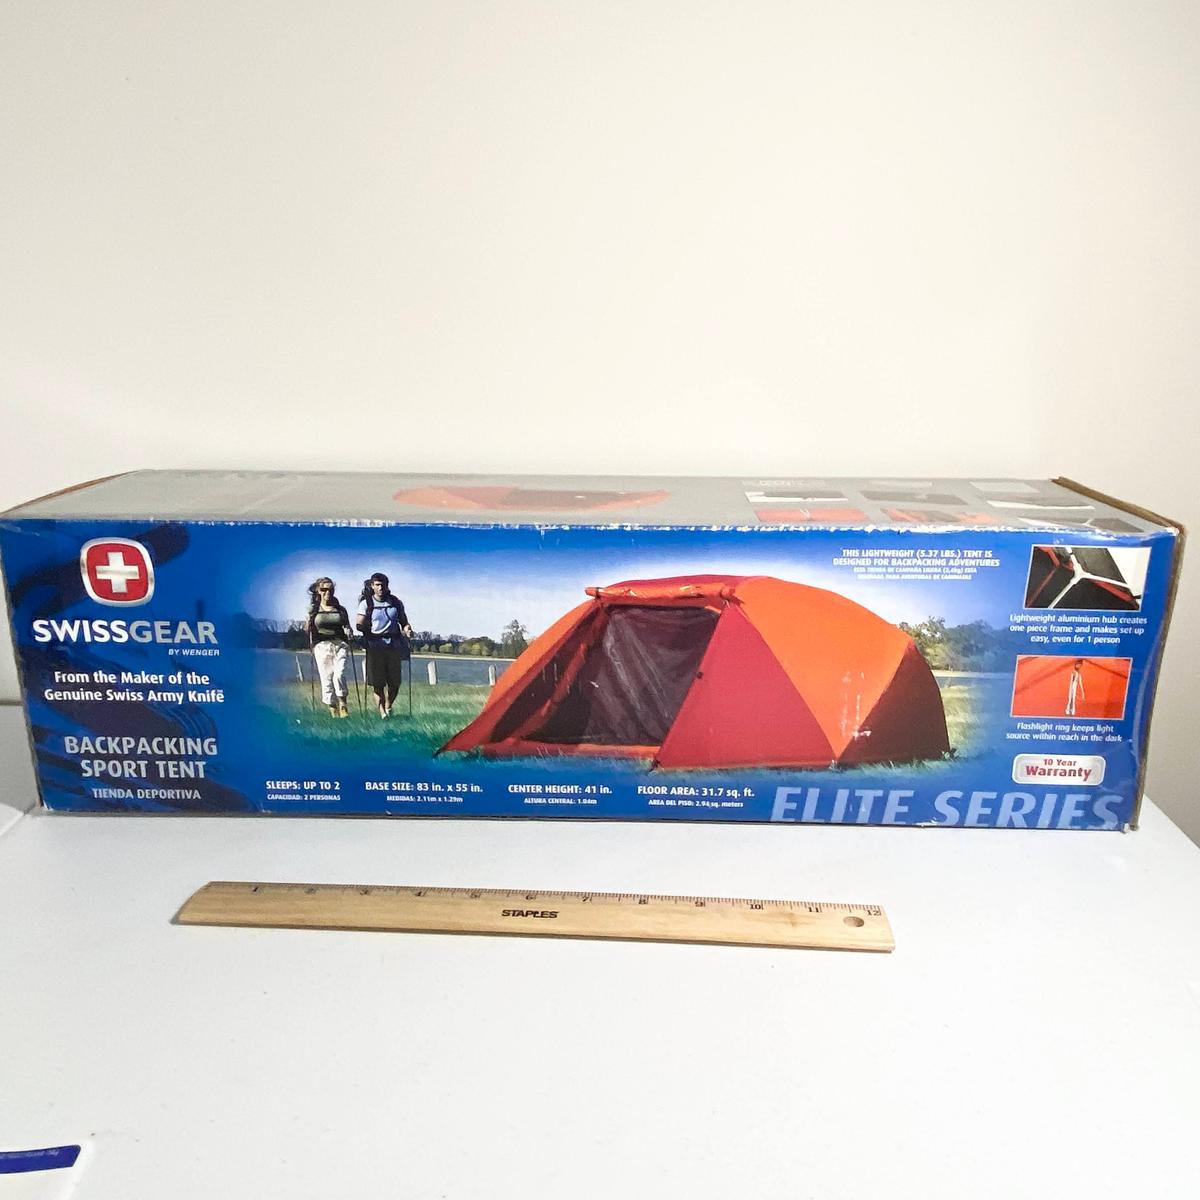 Backpacking Sport Tent by Swissgear in Box